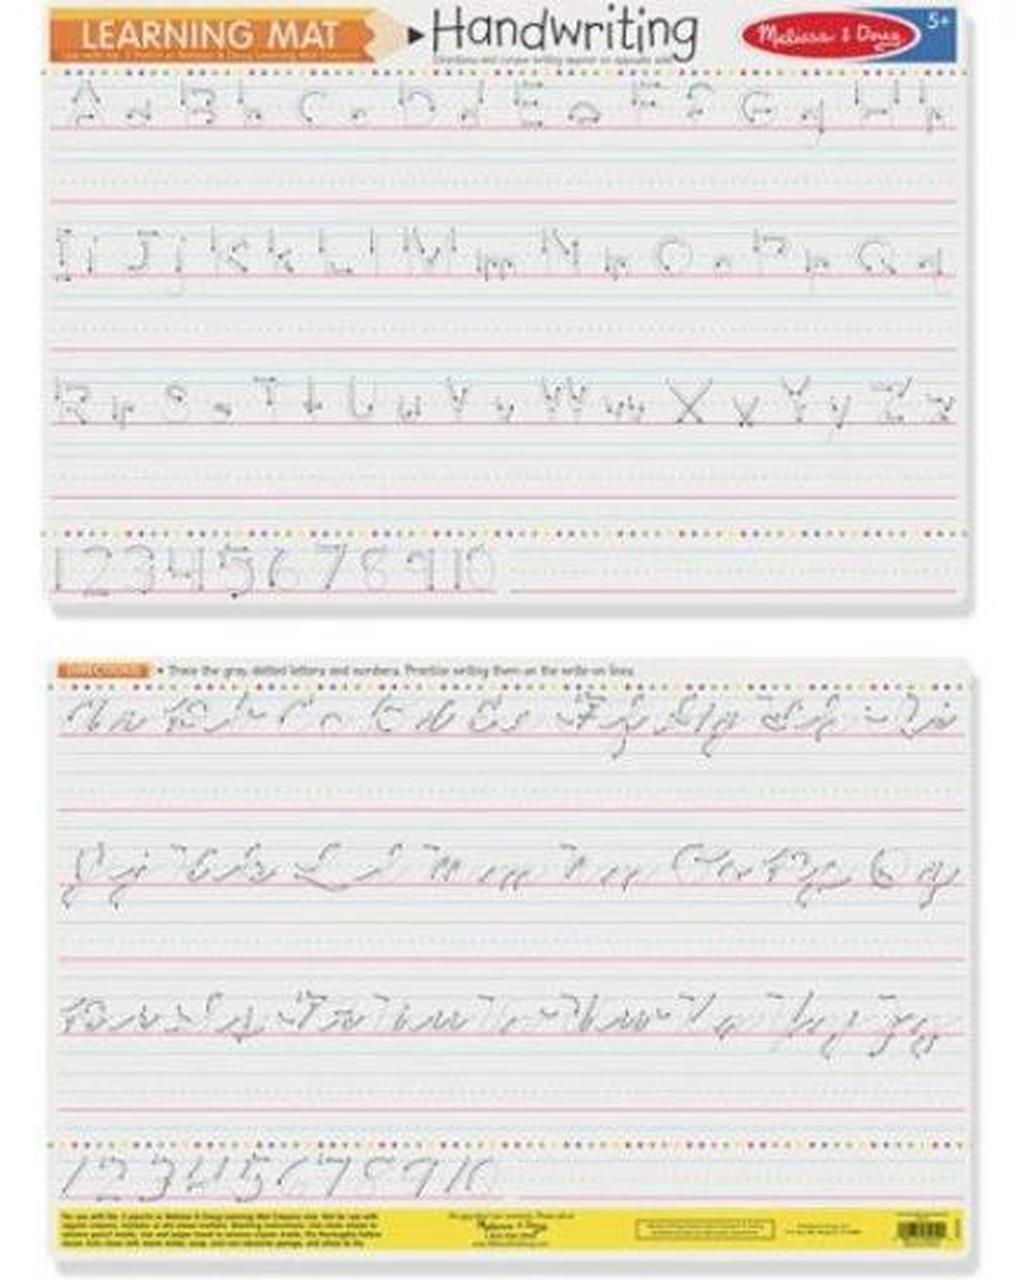 Learning Mat Handwriting